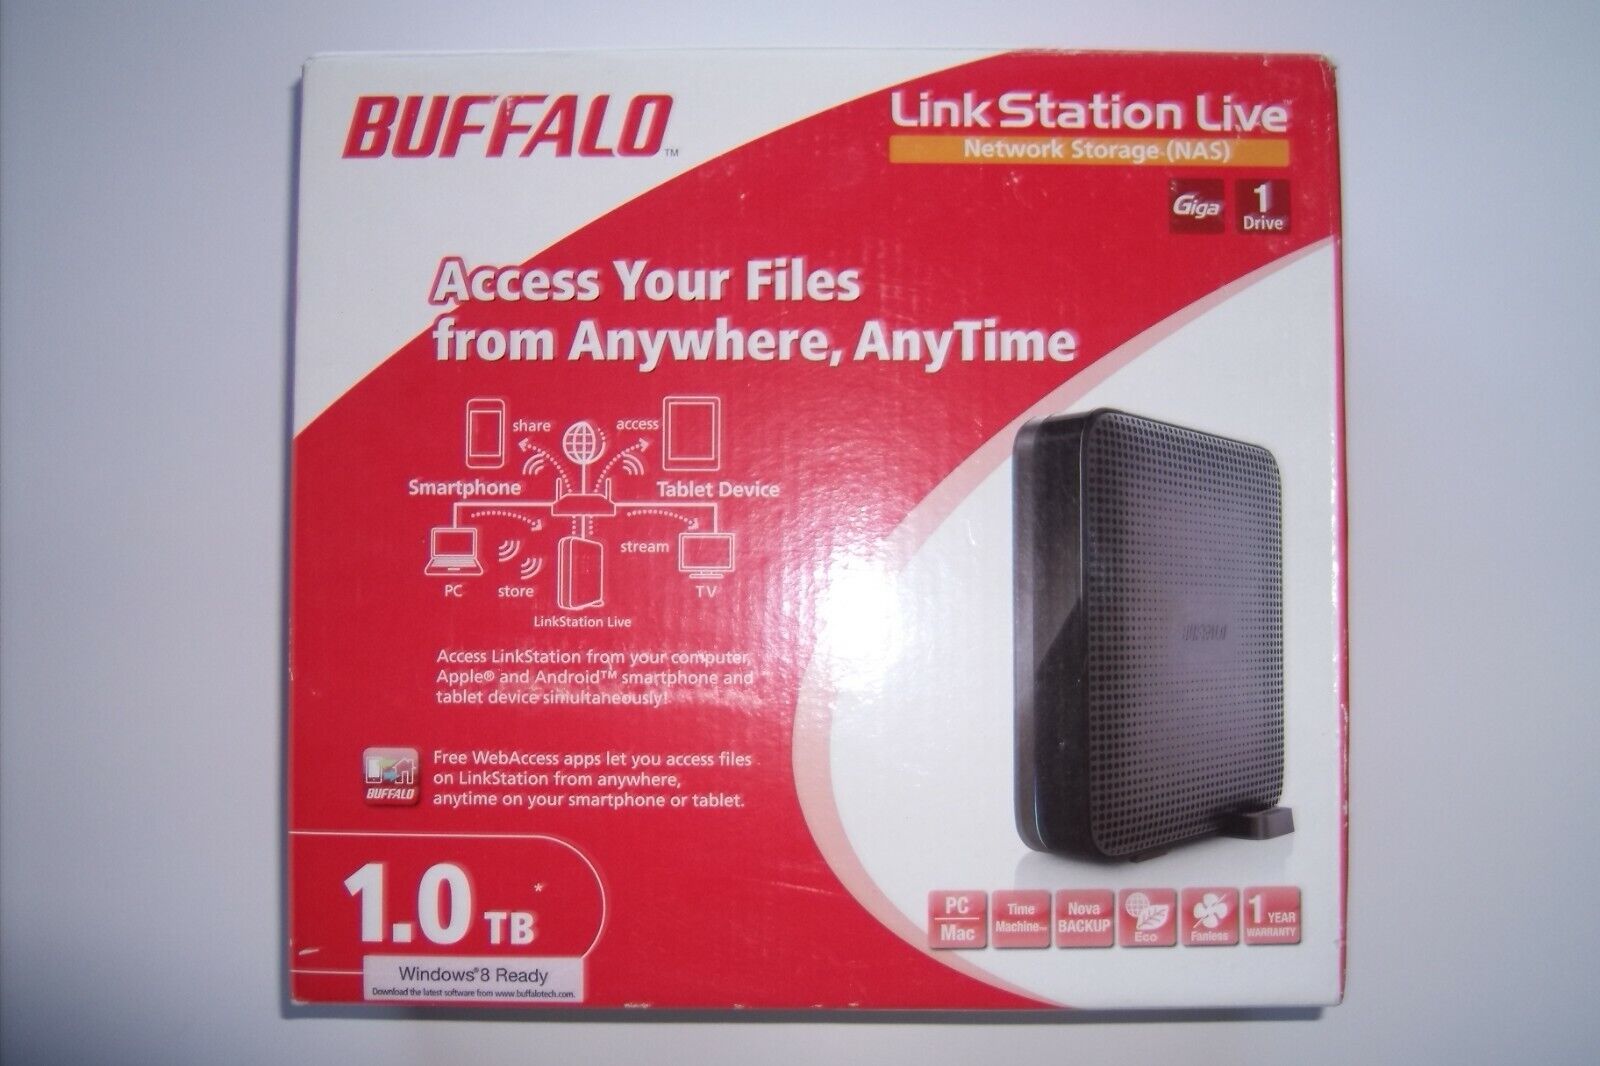 Buffalo Link Station Live Network Storage (NAS) 1.0 TB